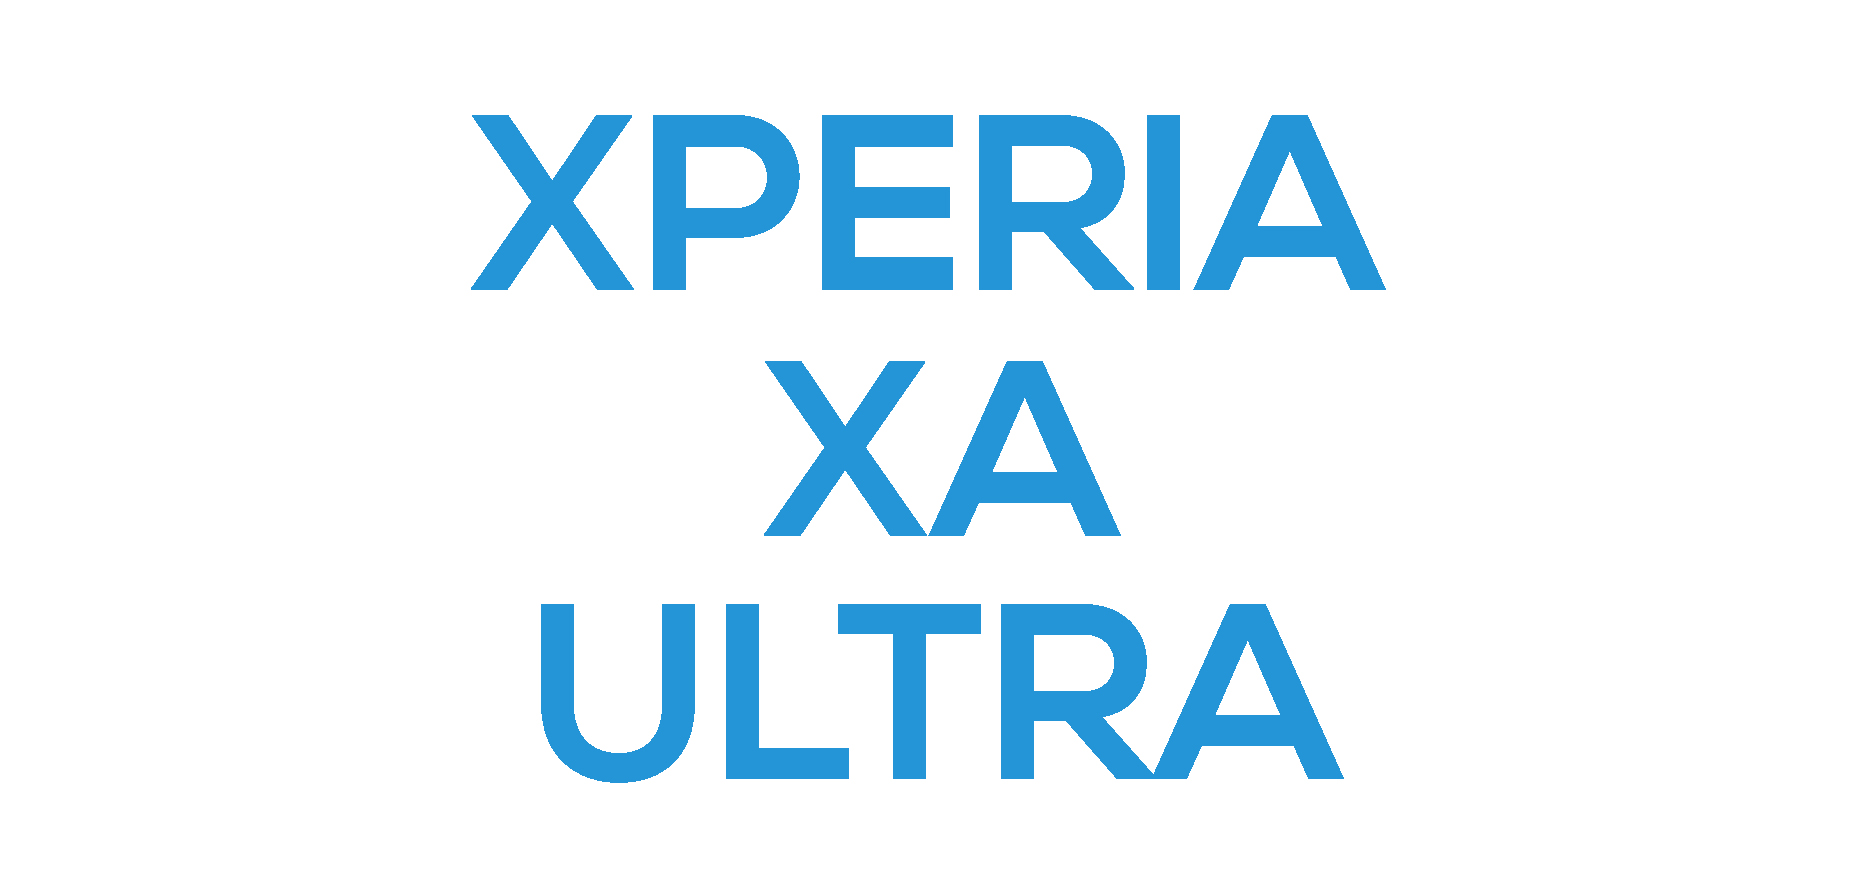 Xperia XA Ultra